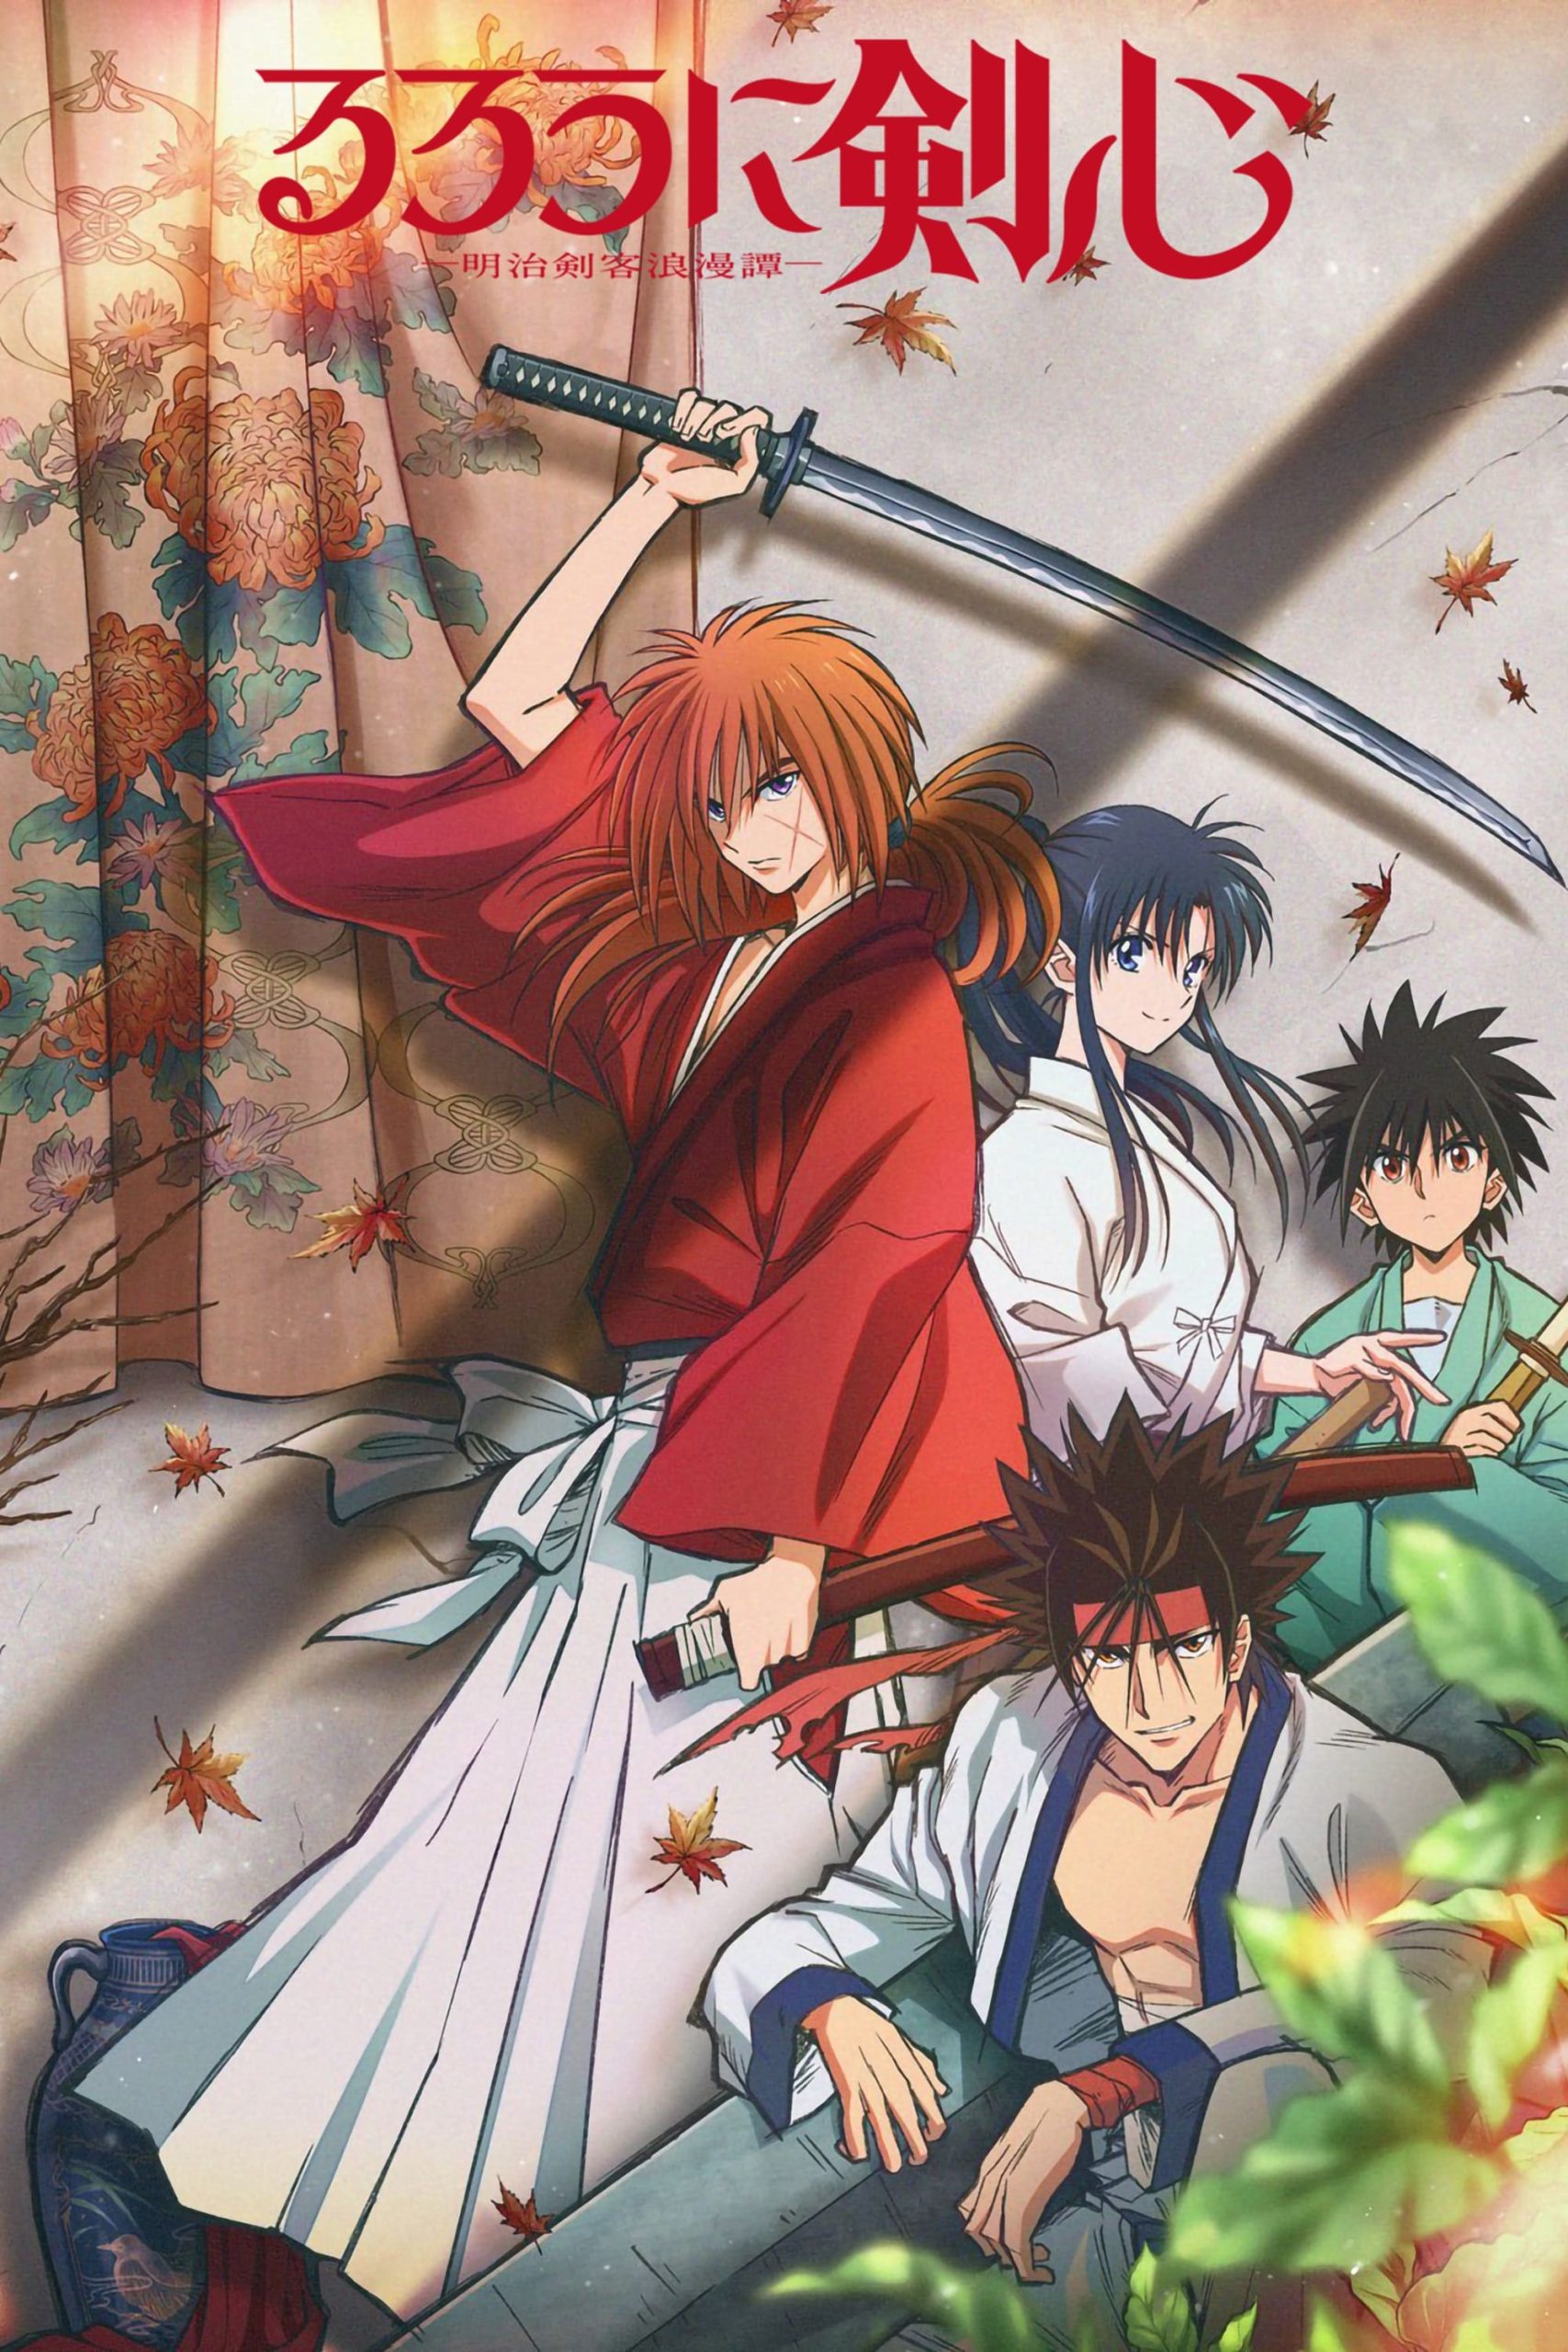 Assistir Rurouni Kenshin Online